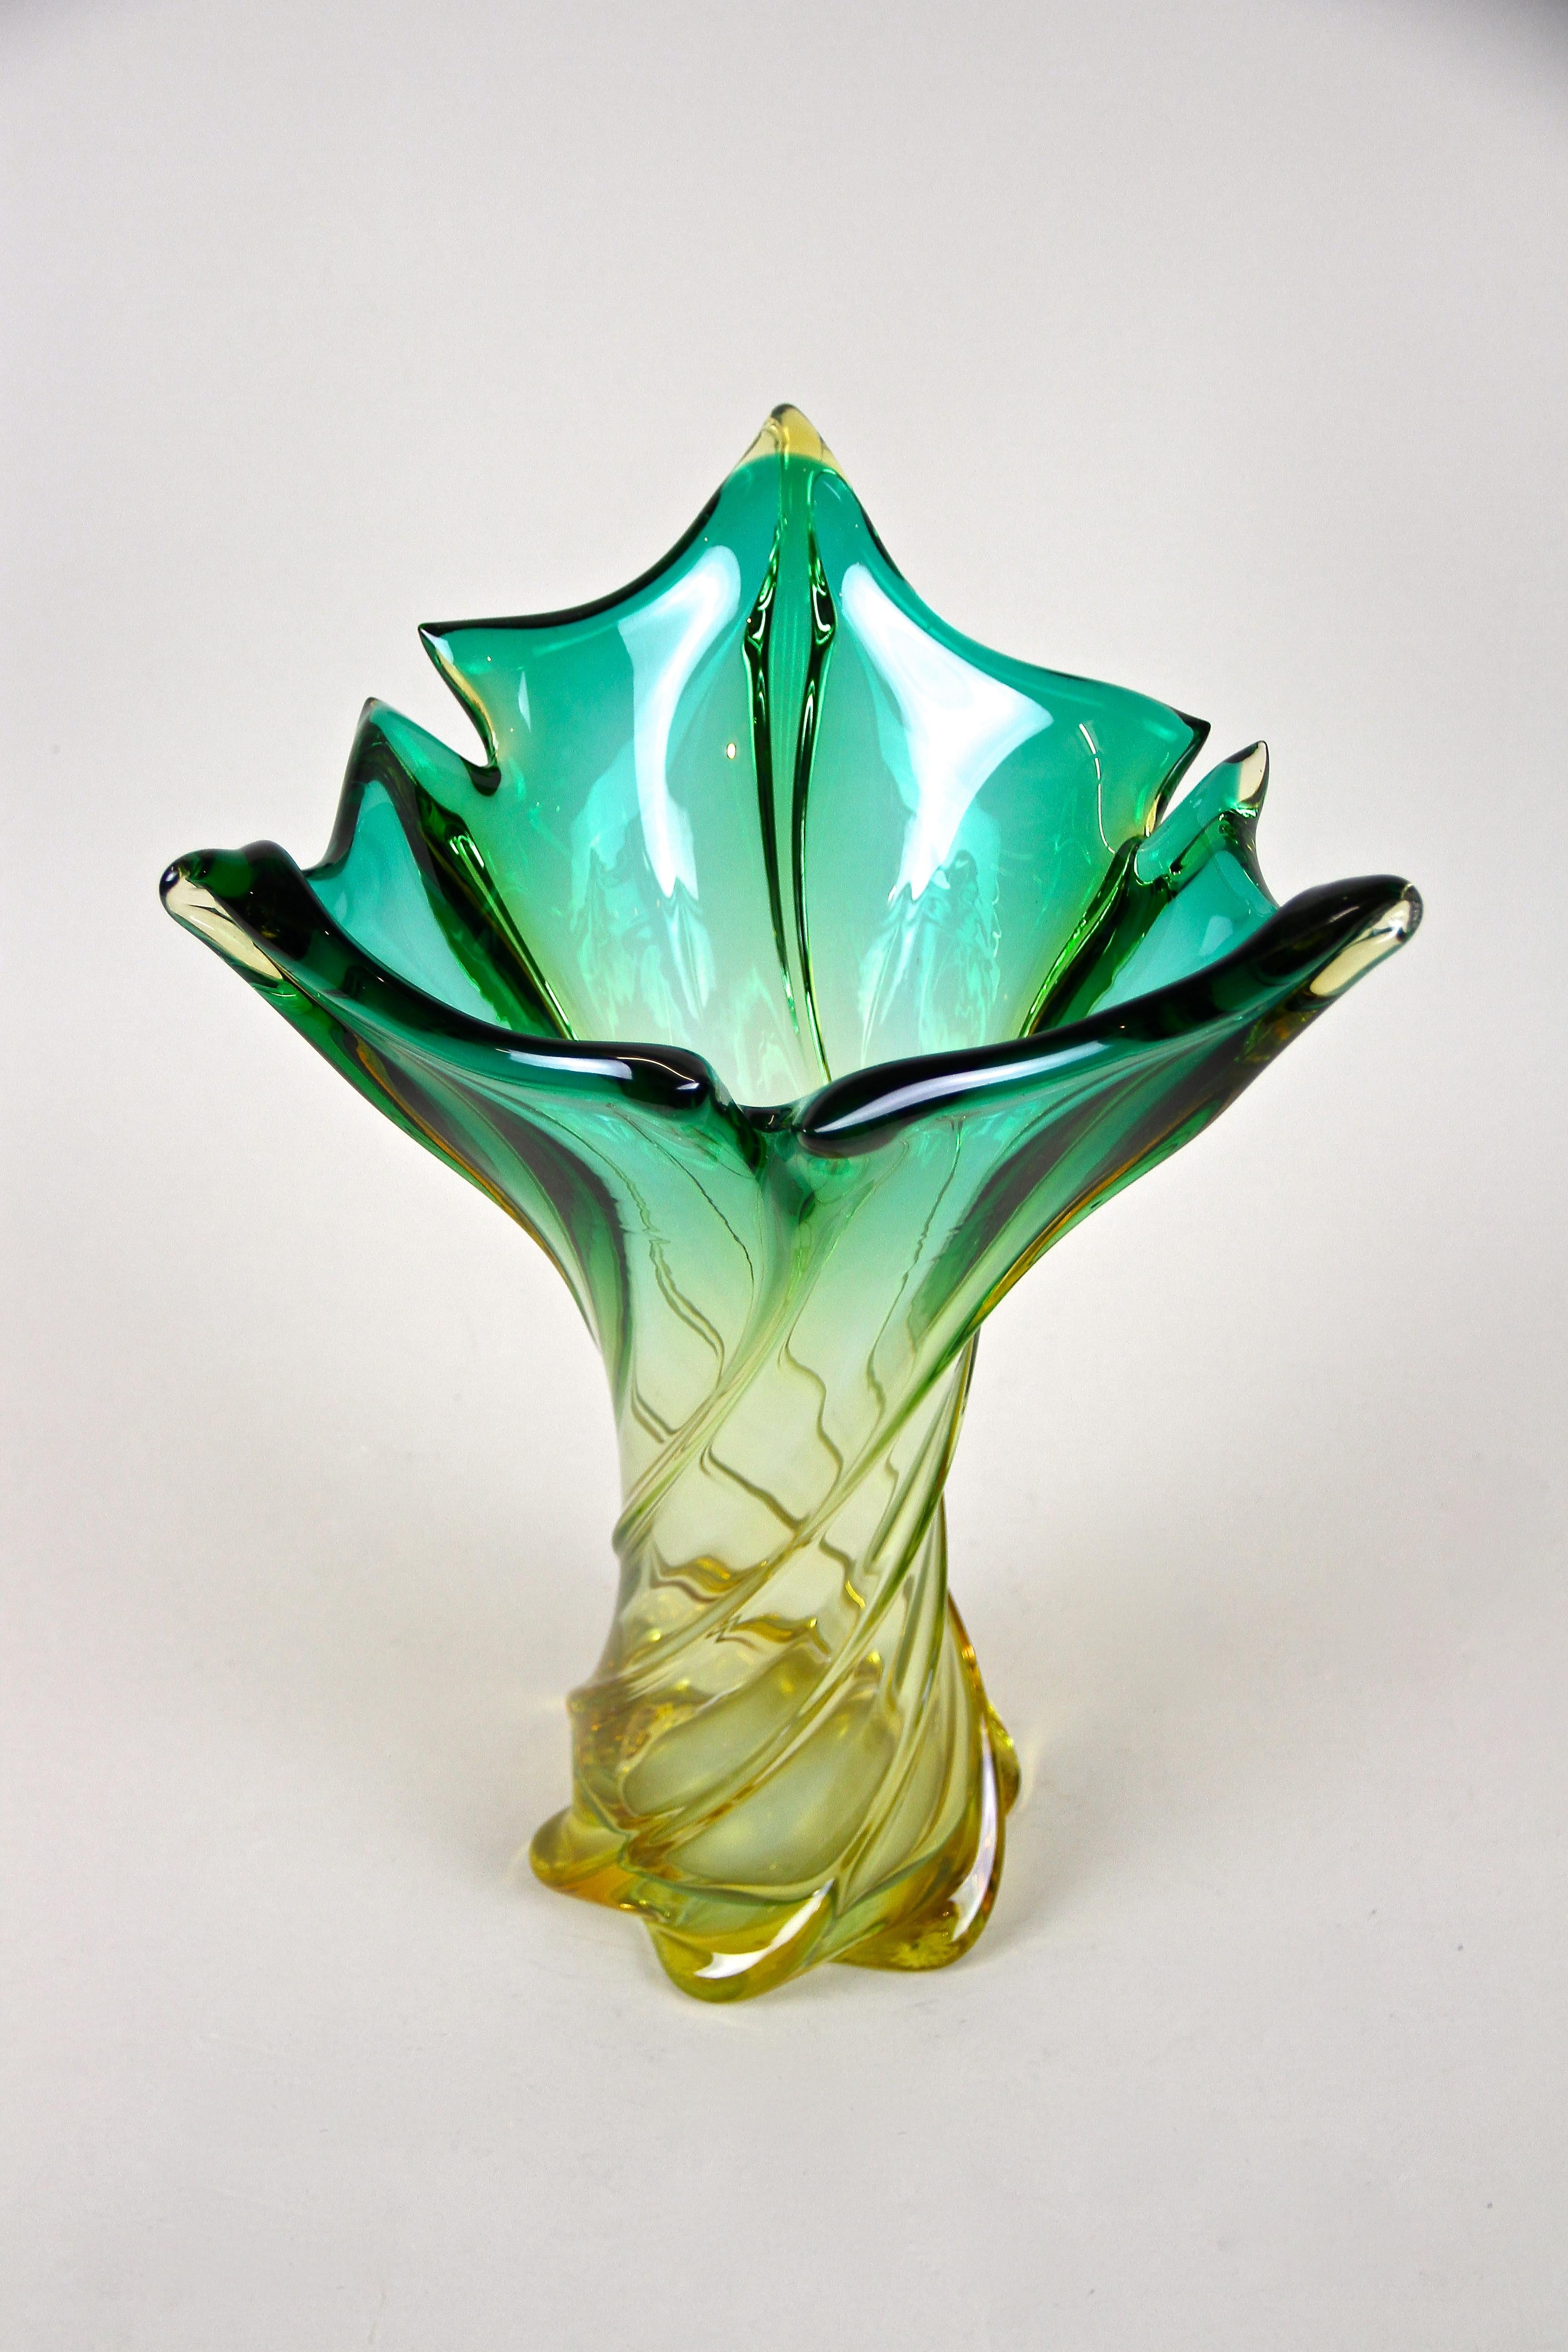 Mid-Century Murano Glass Vase, Italy, circa 1960 For Sale 1